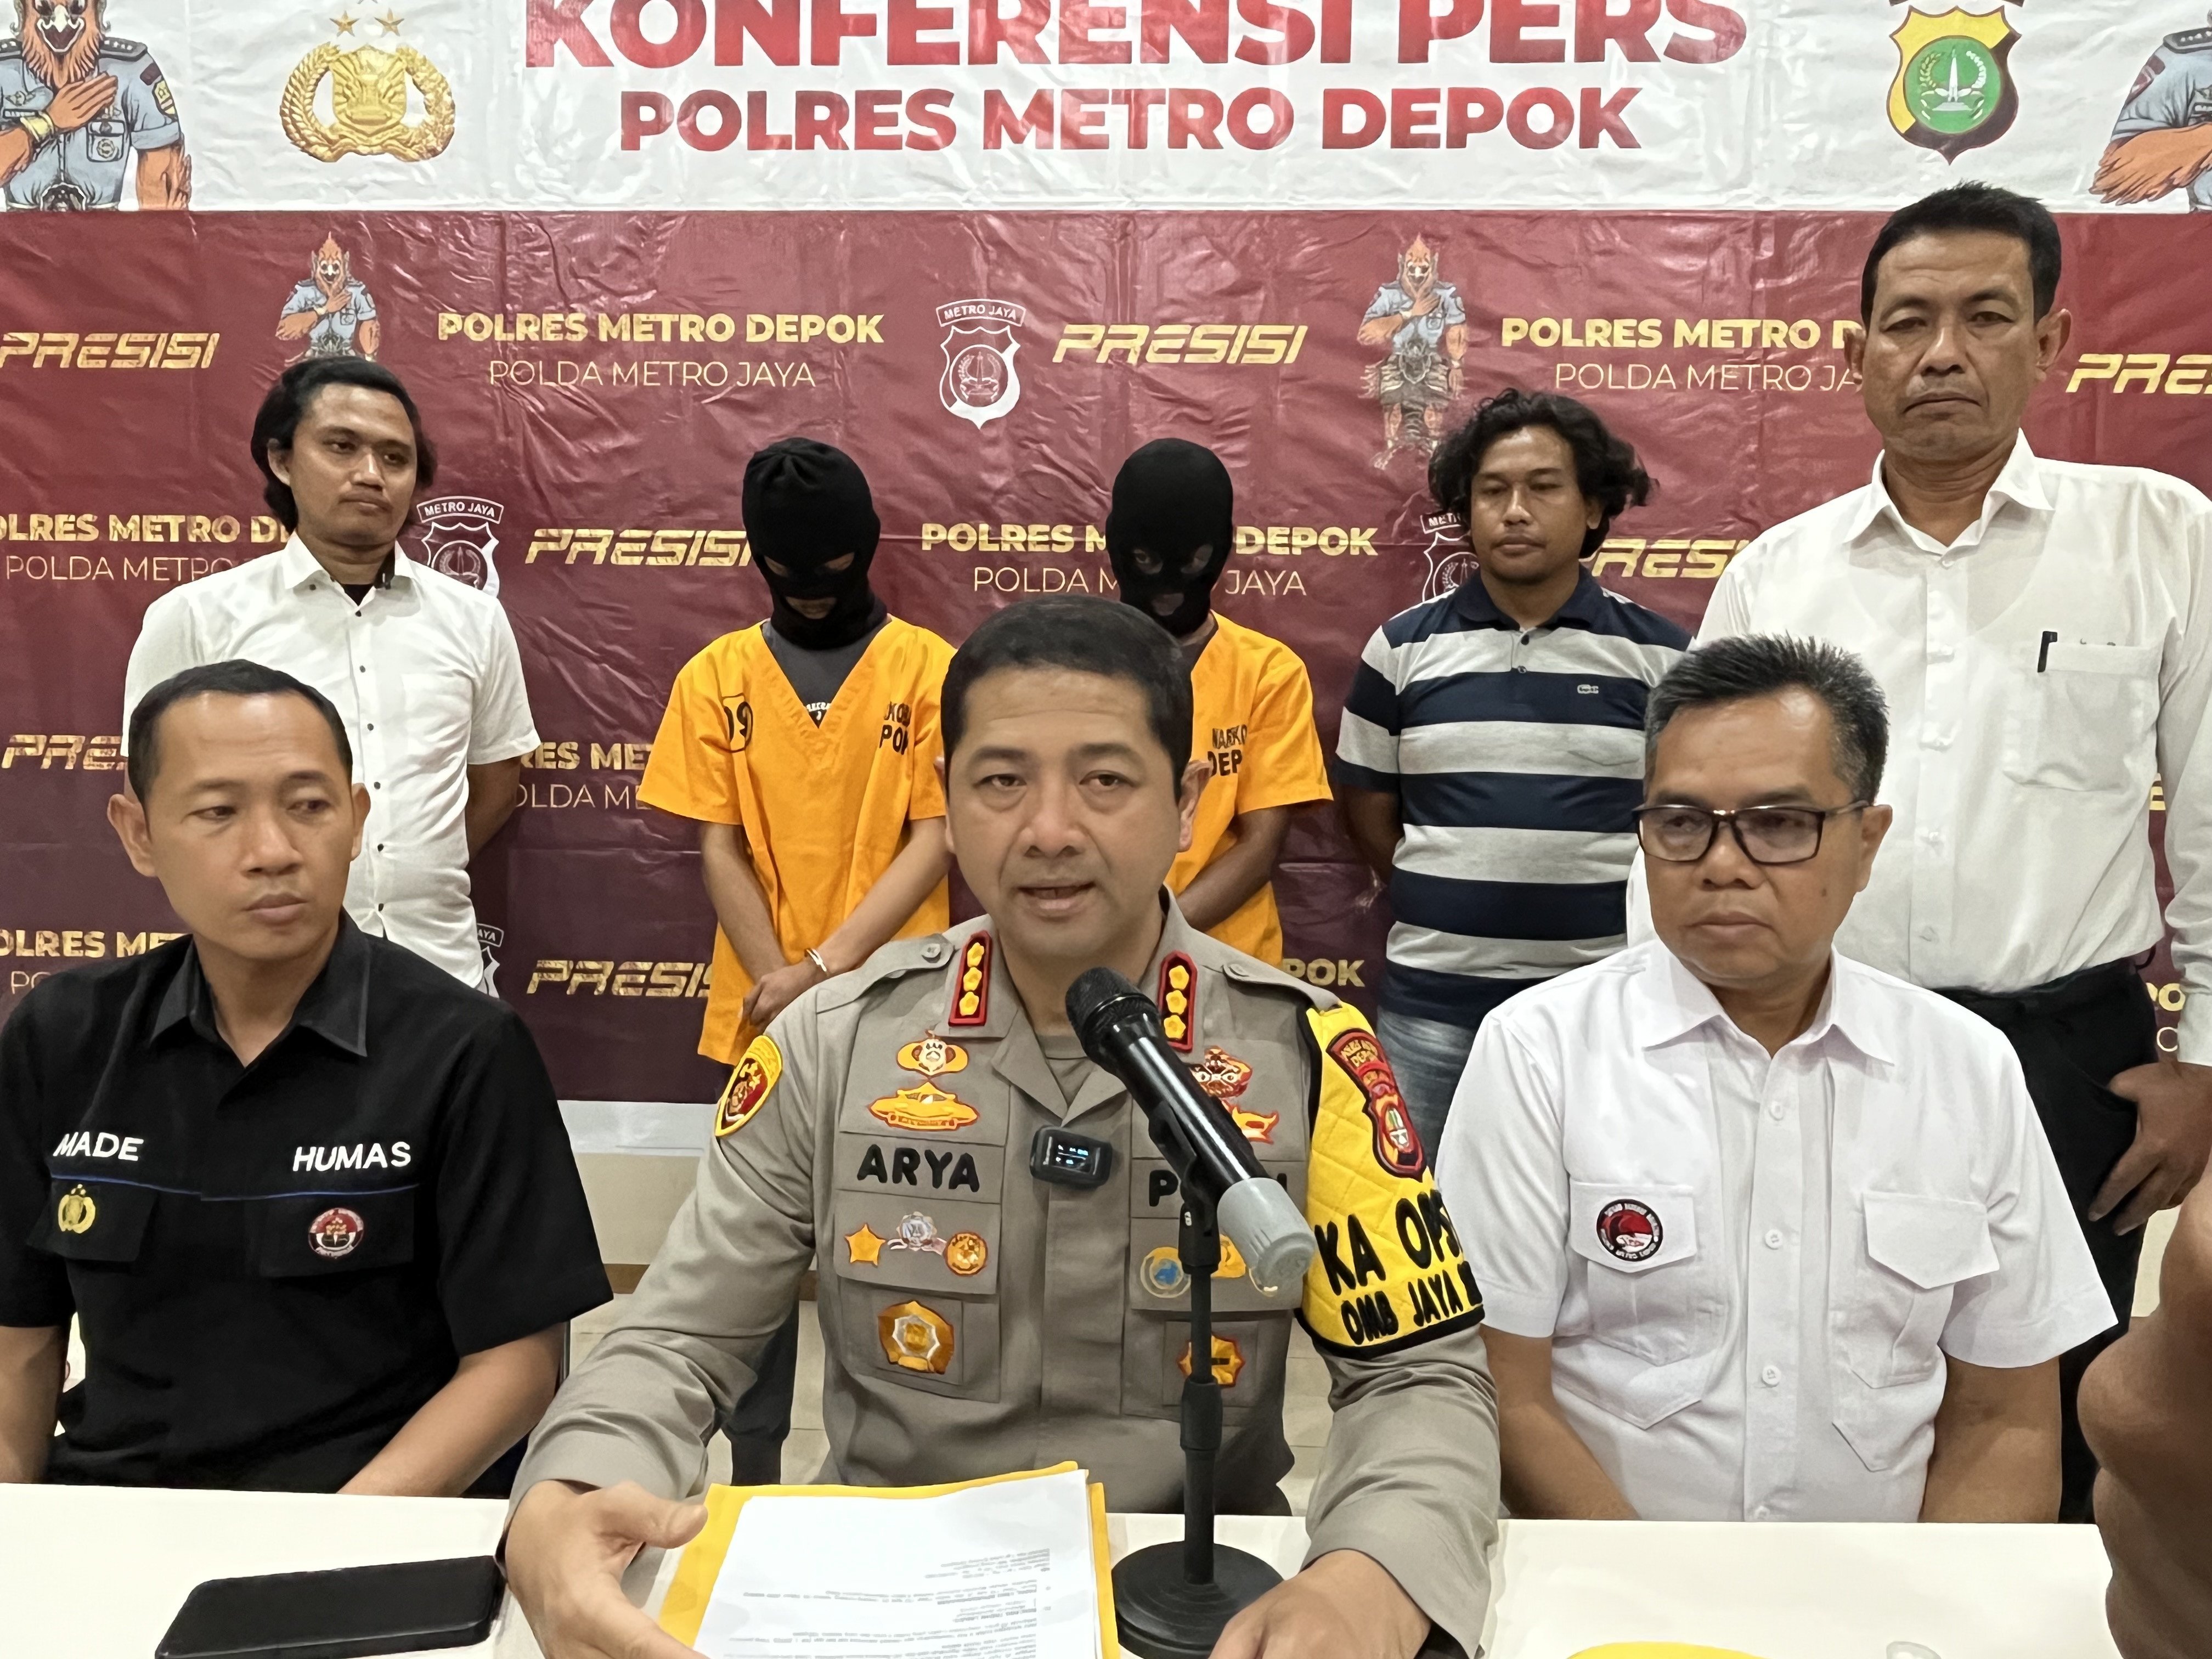 Polres Metro Depok Ungkap Kasus Peredaran Narkoba Jenis Sabu-sabu dan Likuid Ganja - JPNN.com Jabar